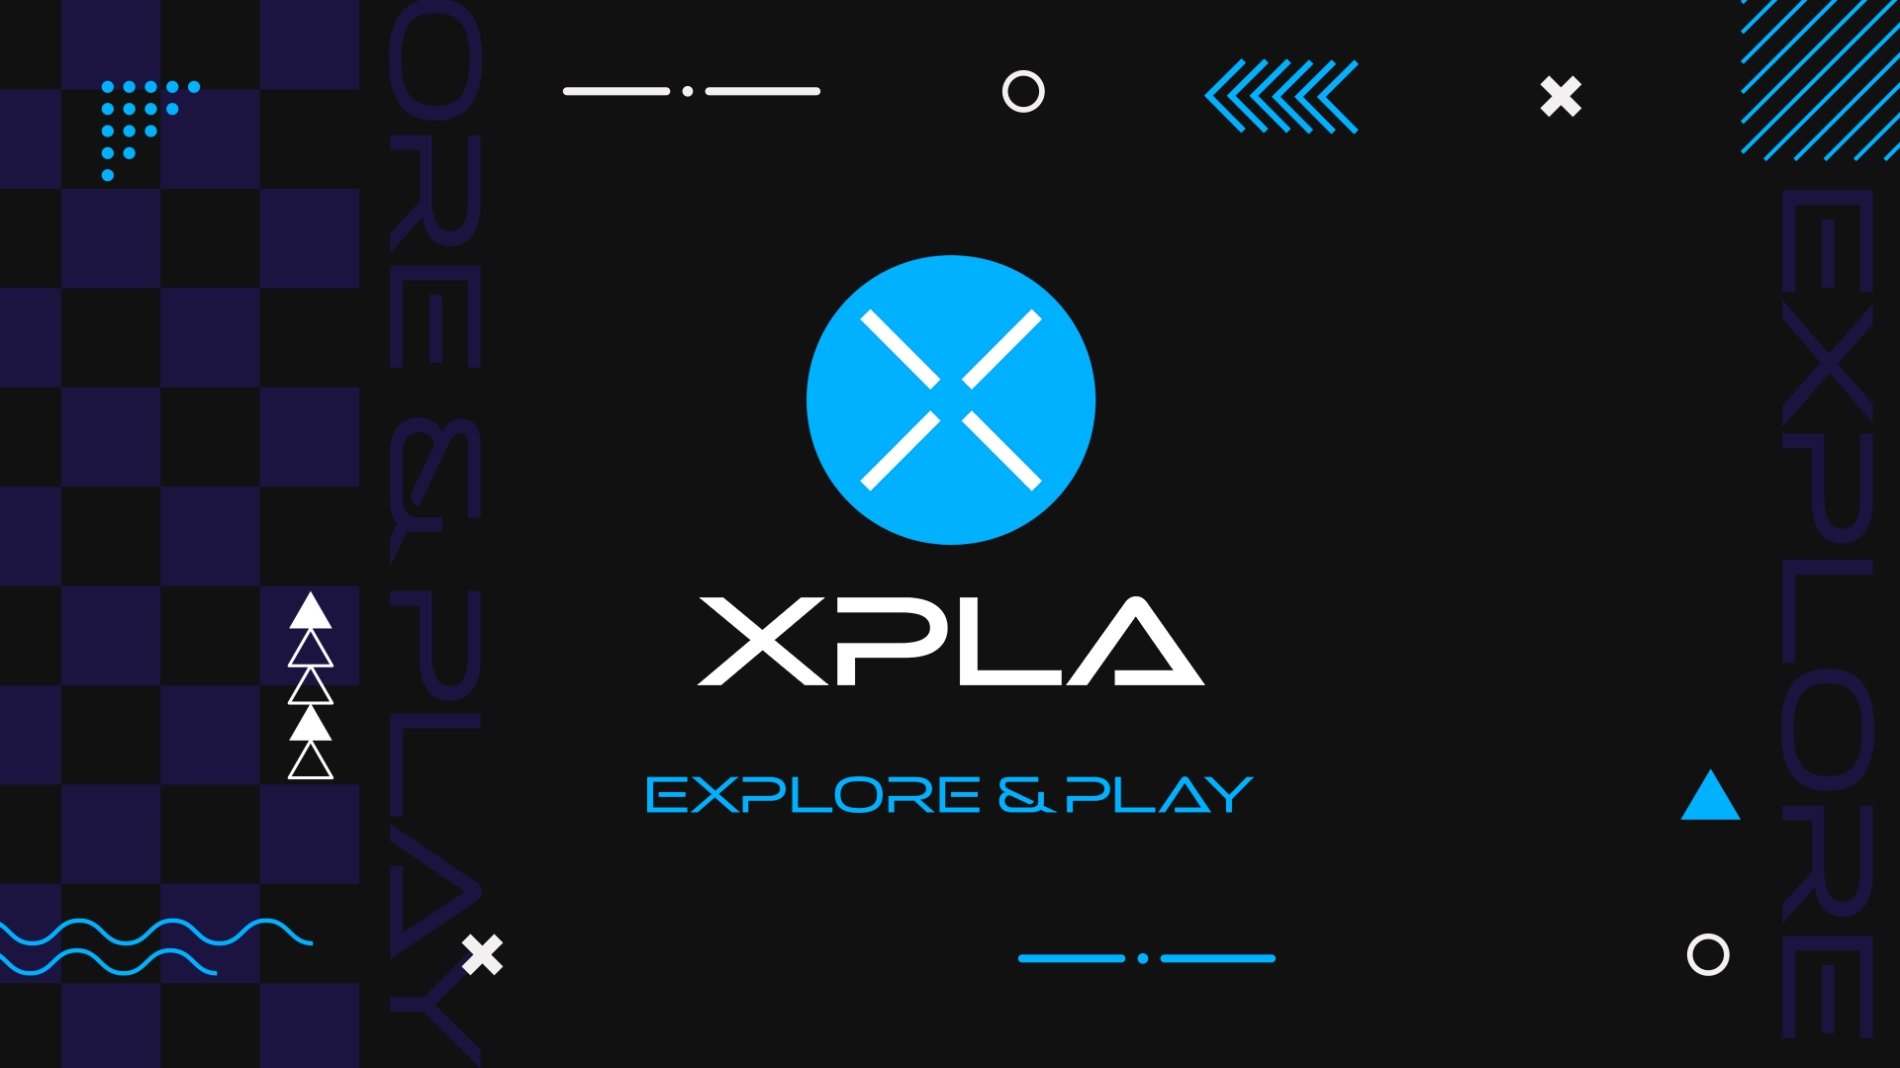 [IT이슈] 엑스플라(XPLA) 온보딩 게임, 재화 전환 수수료 지원 이벤트 外